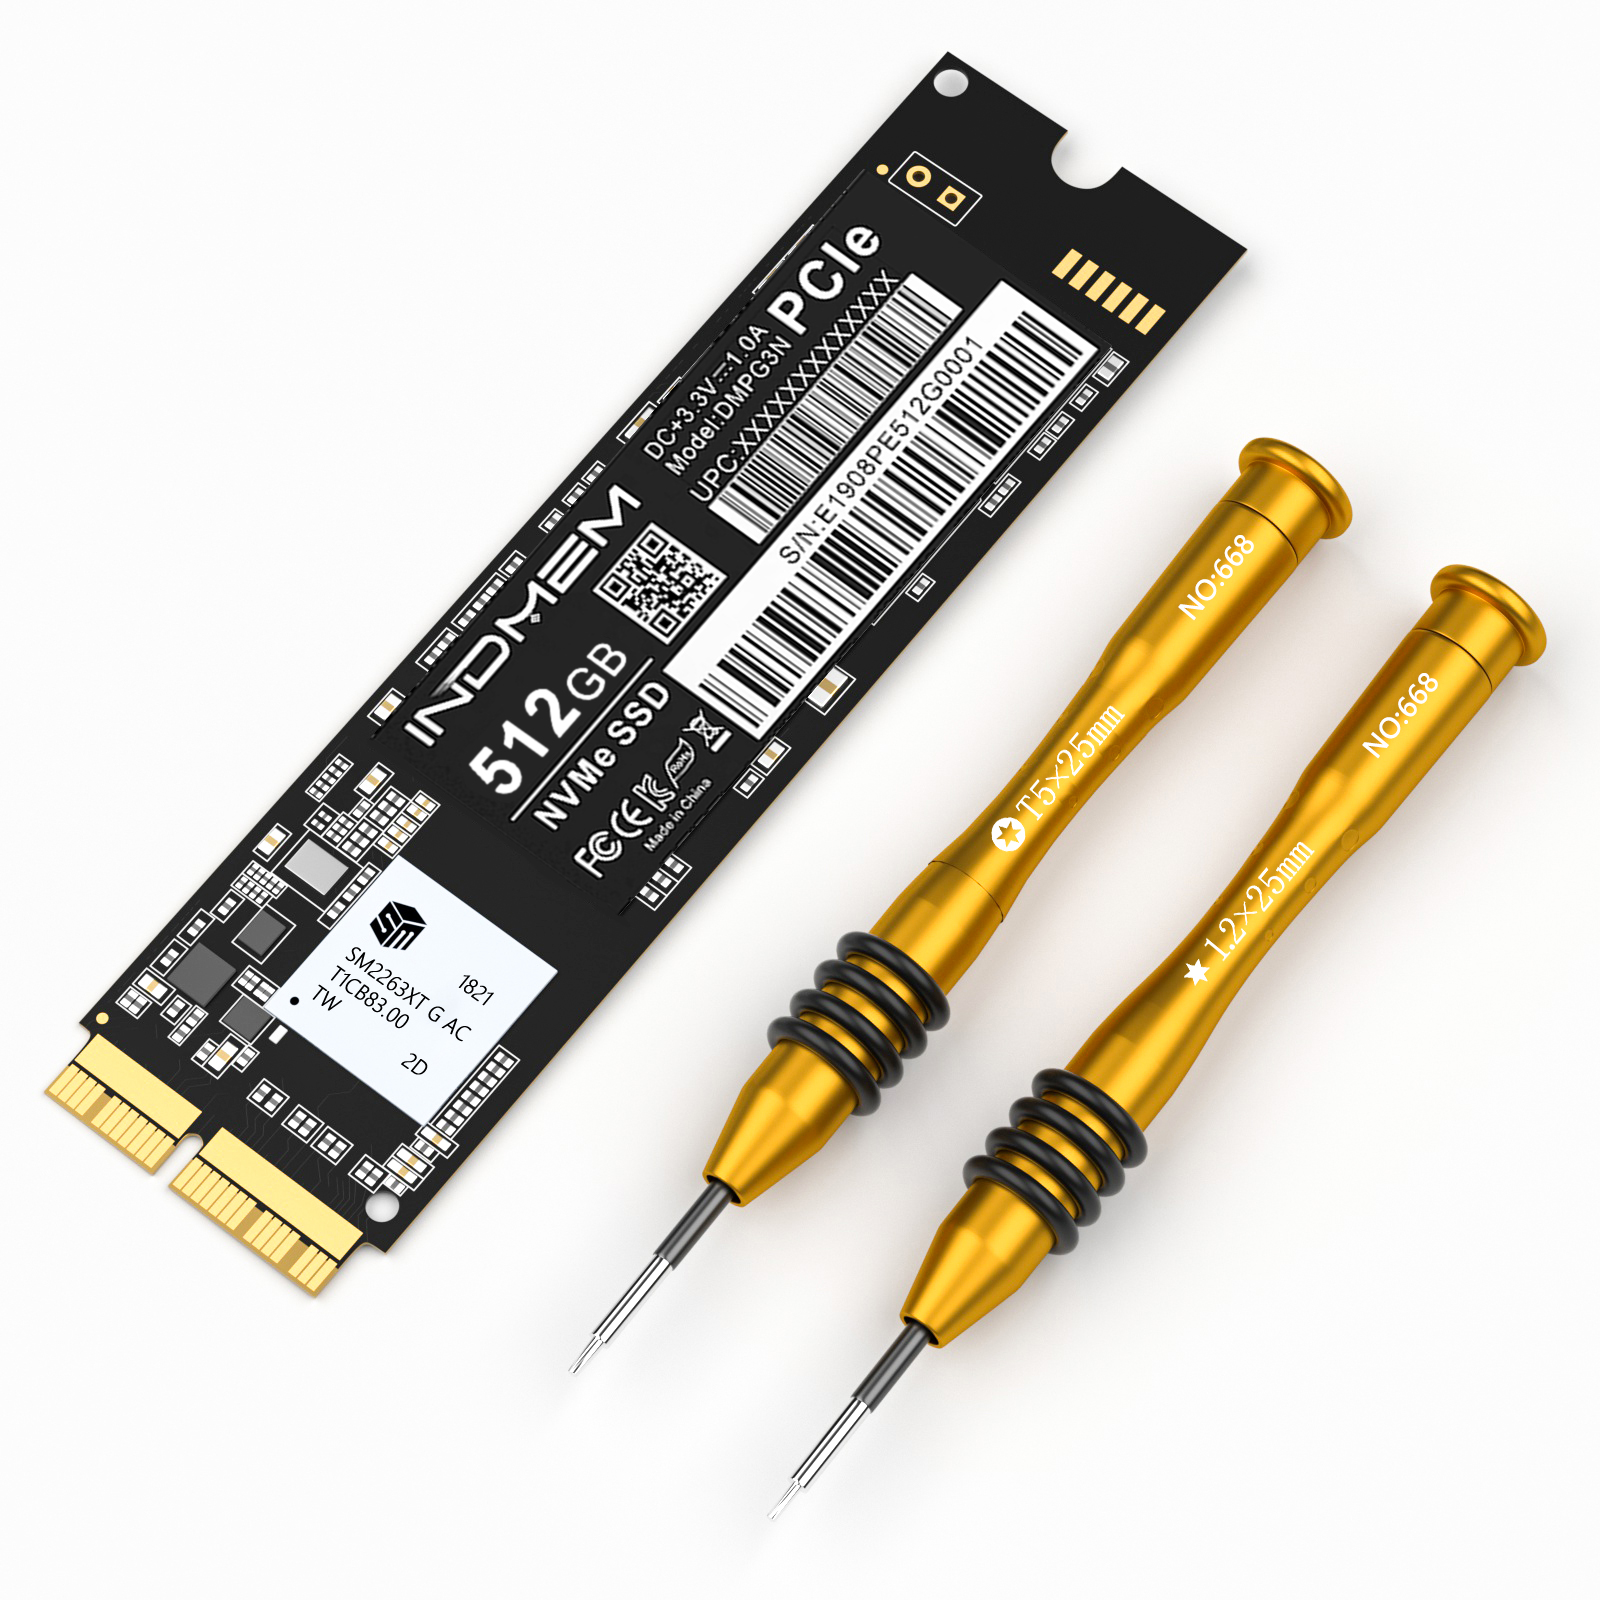 INDMEM PCIe NVME Gen3x4 SSD 3D TLC NAND Flash Hard Drive Replacement for Macbook Air, Macbook Pro Retina, iMac, Mac Pro, Mac Mini